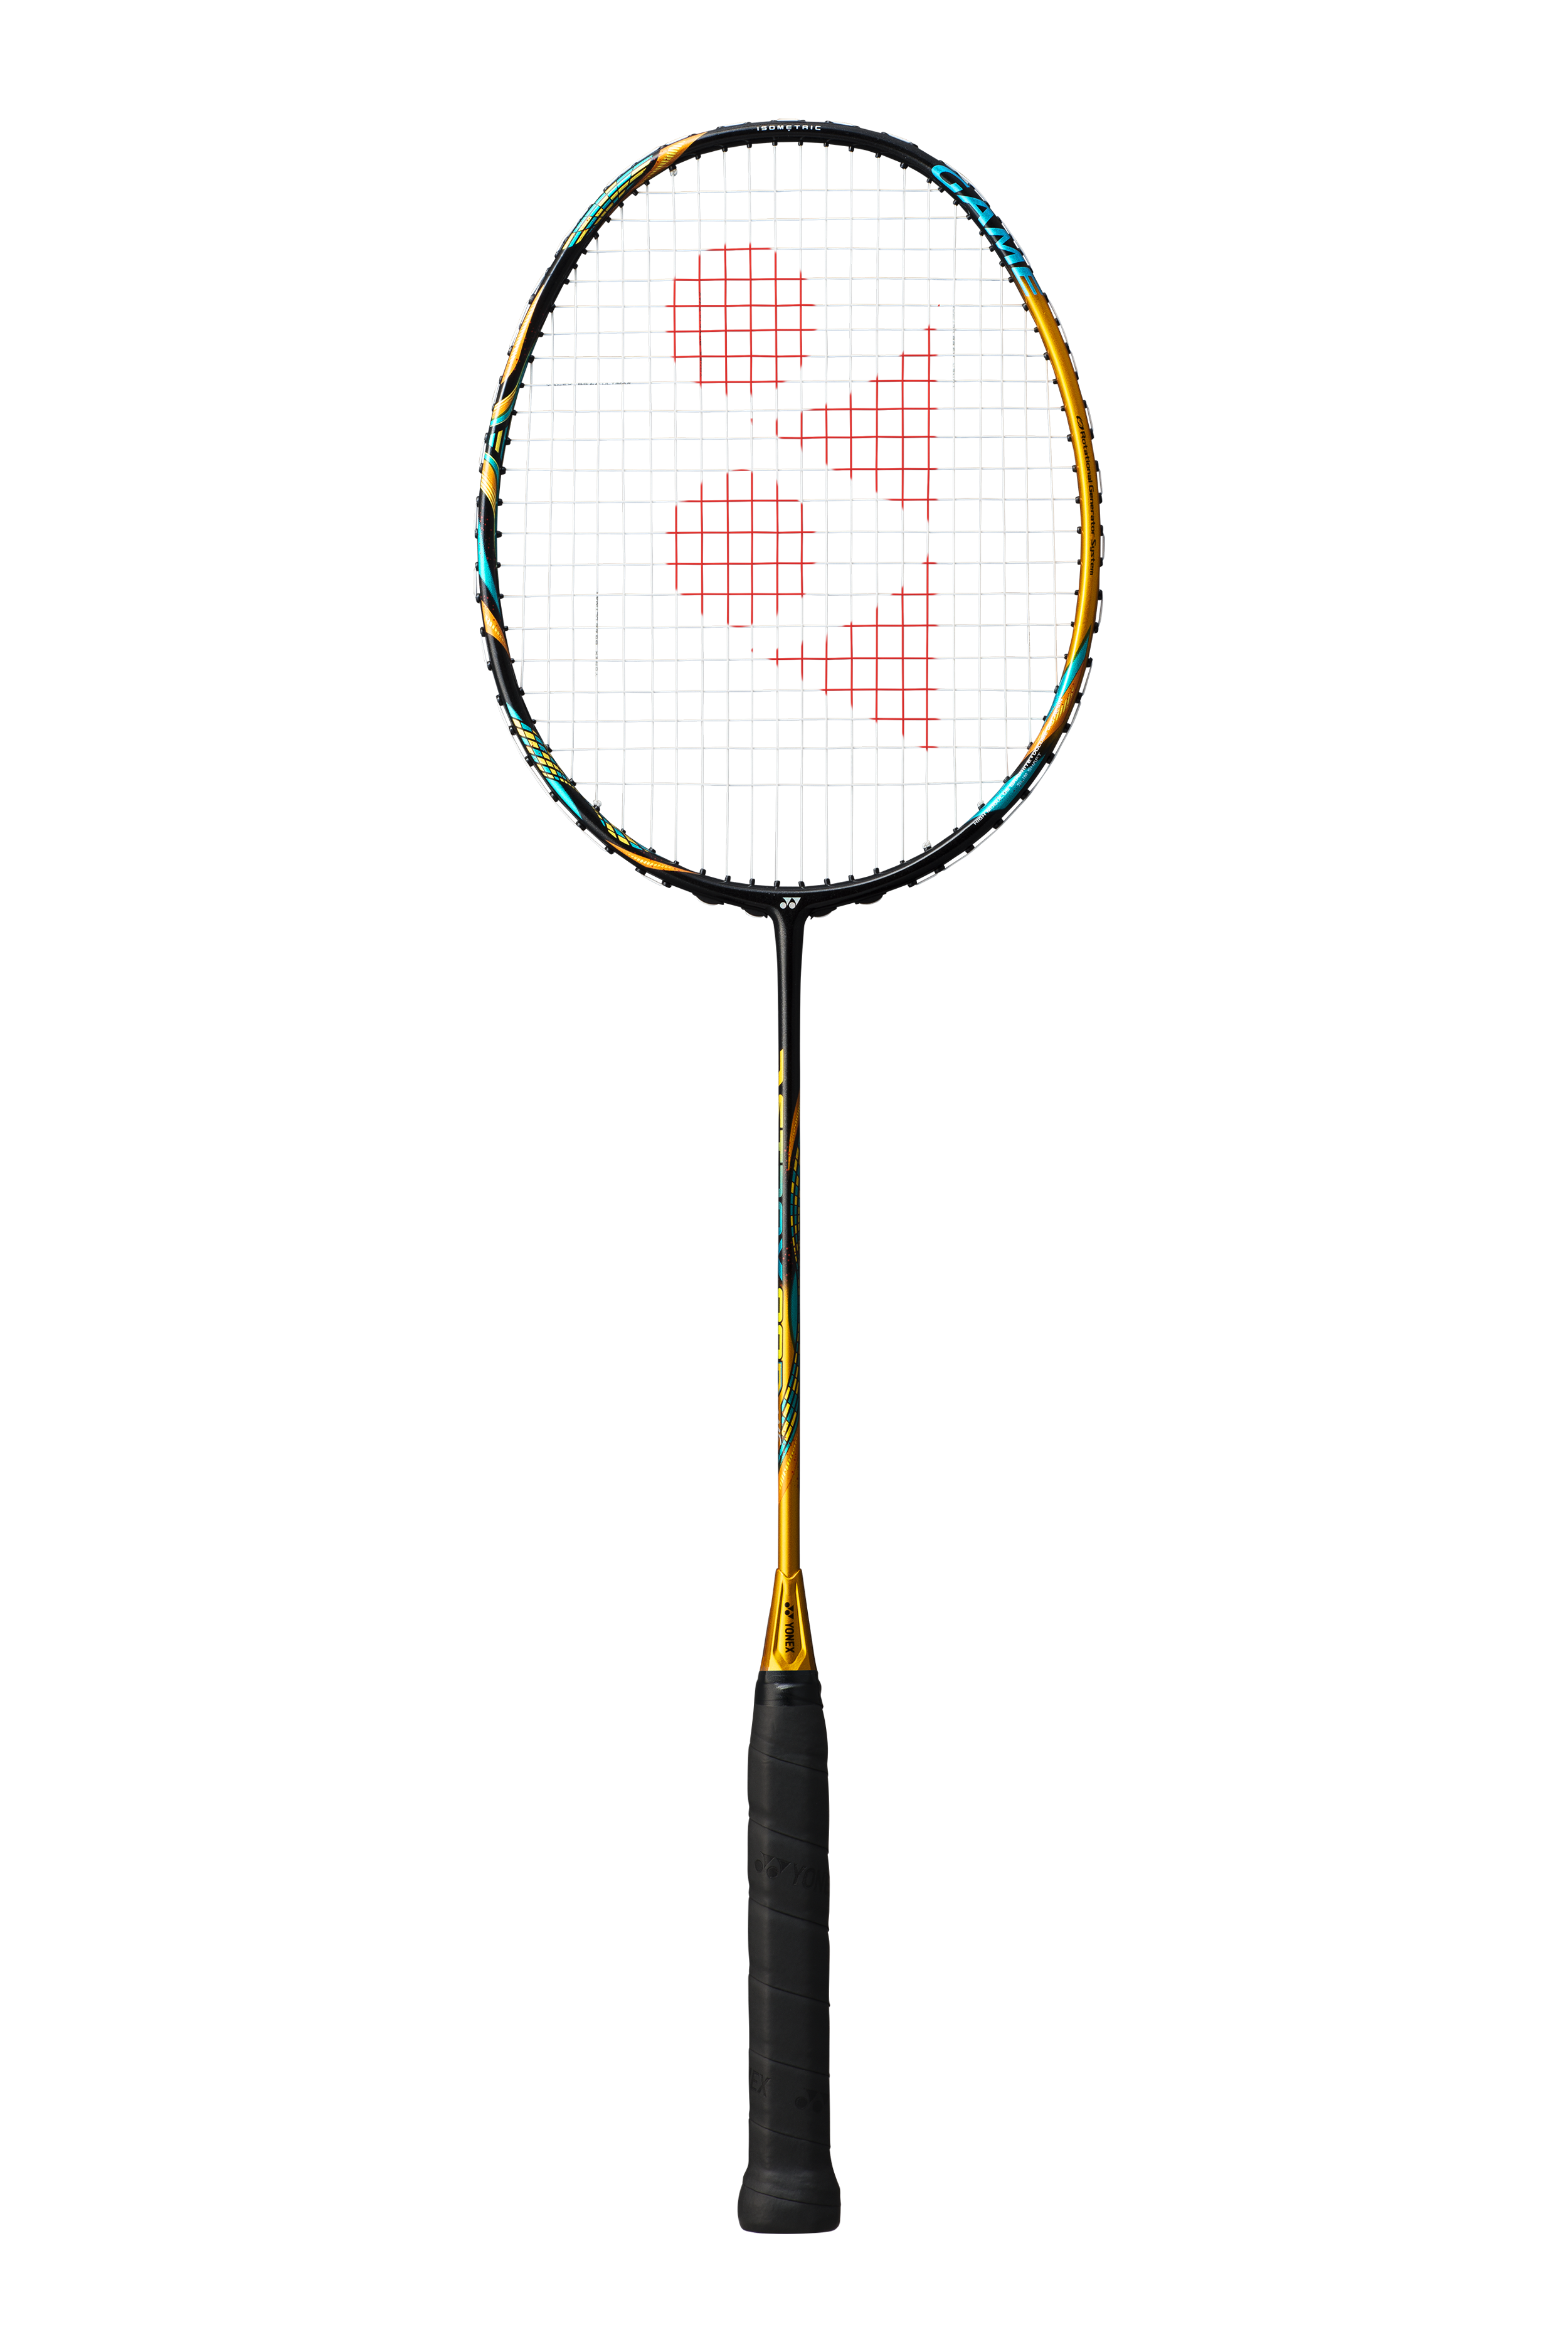 All Badminton Rackets